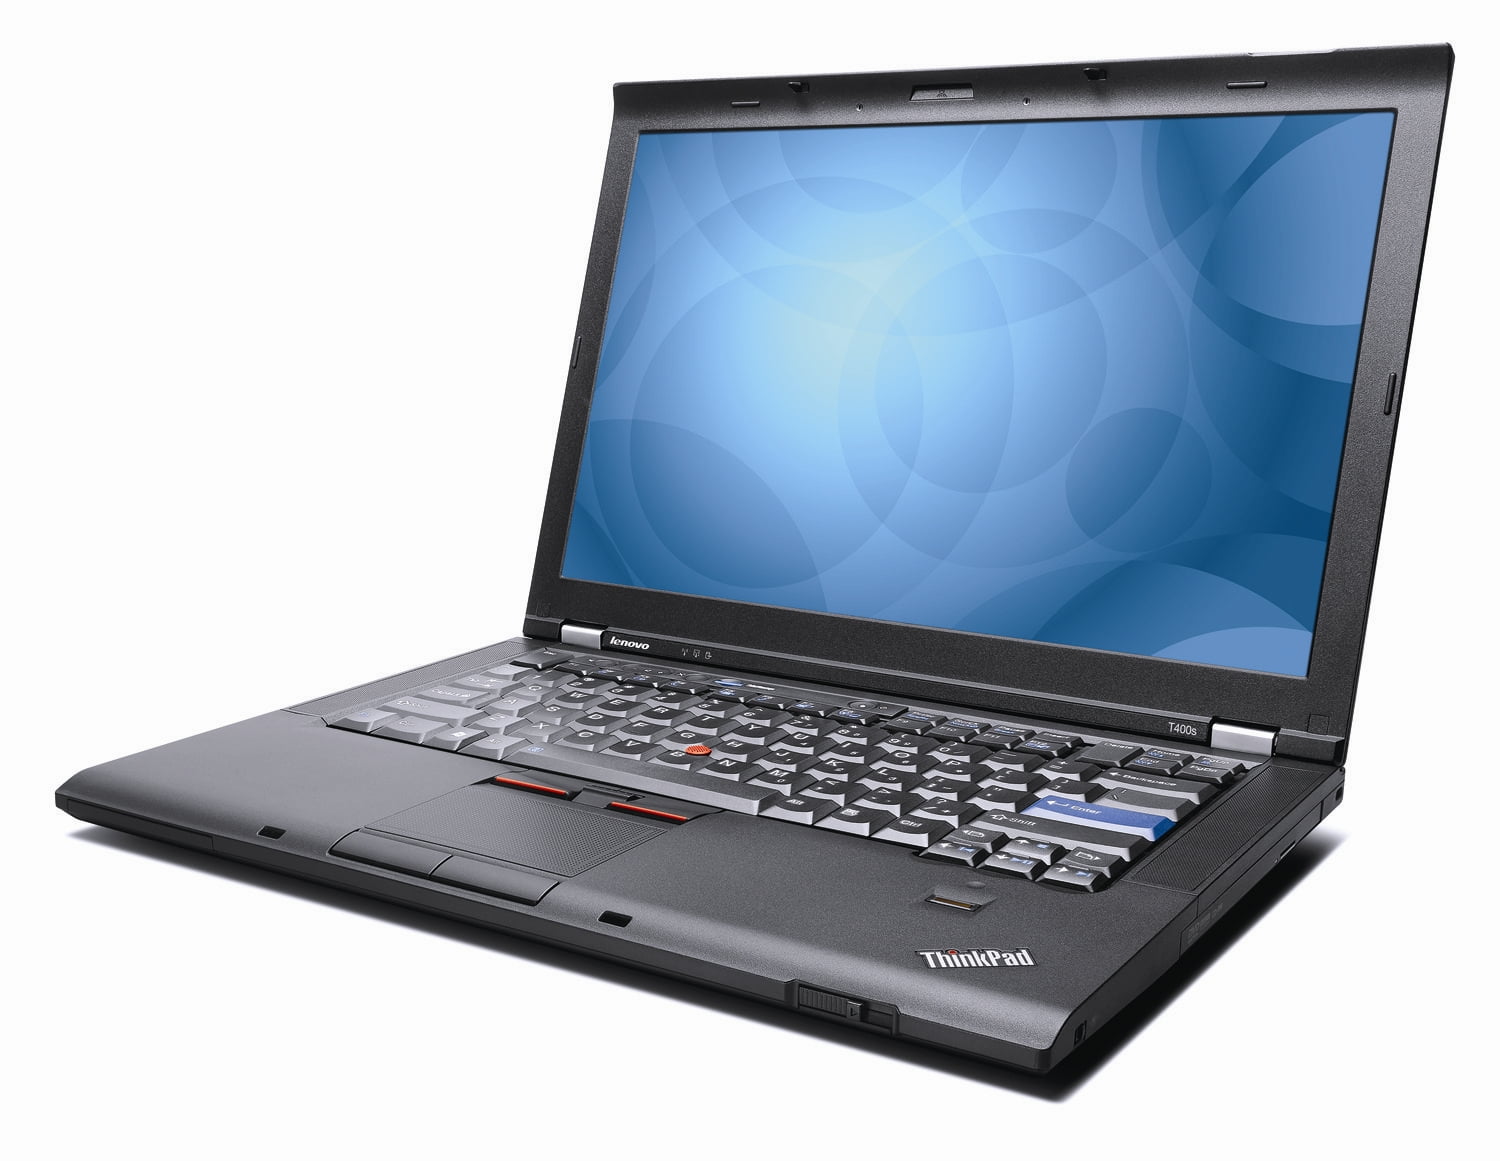 Used Lenovo ThinkPad T400 Notebook - Core 2 Duo 2.40GHz - 4GB - 160GB - DVDRW Windows 7 Pro 64bit